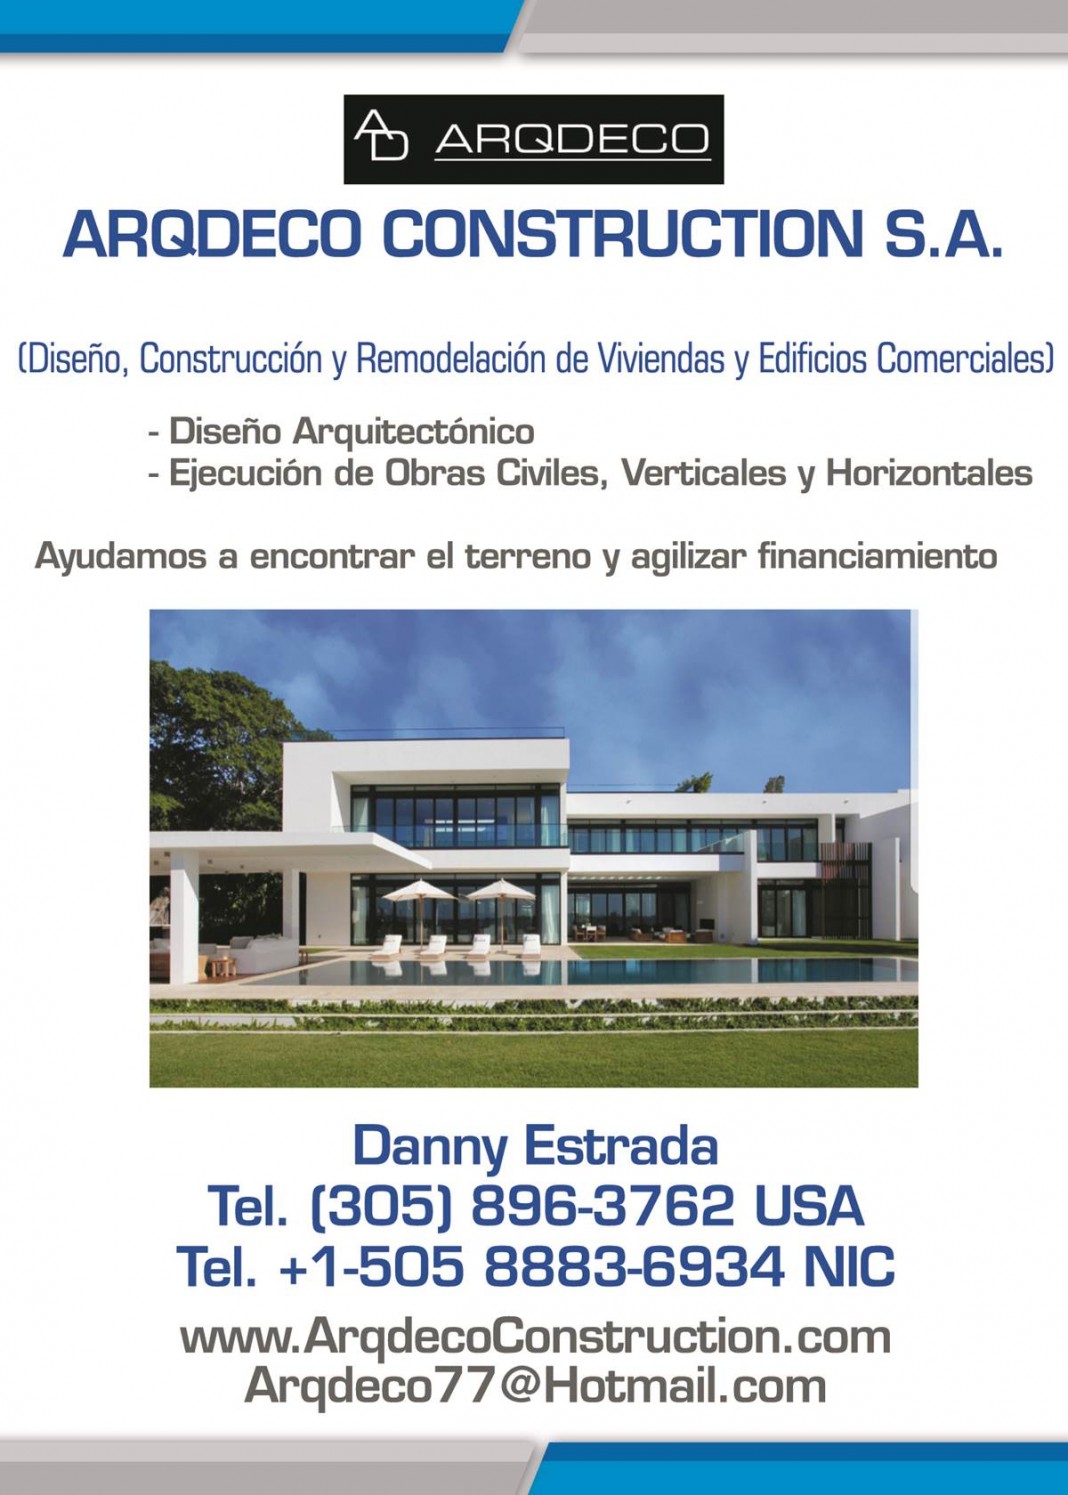 Arqdeco Construction S.A.